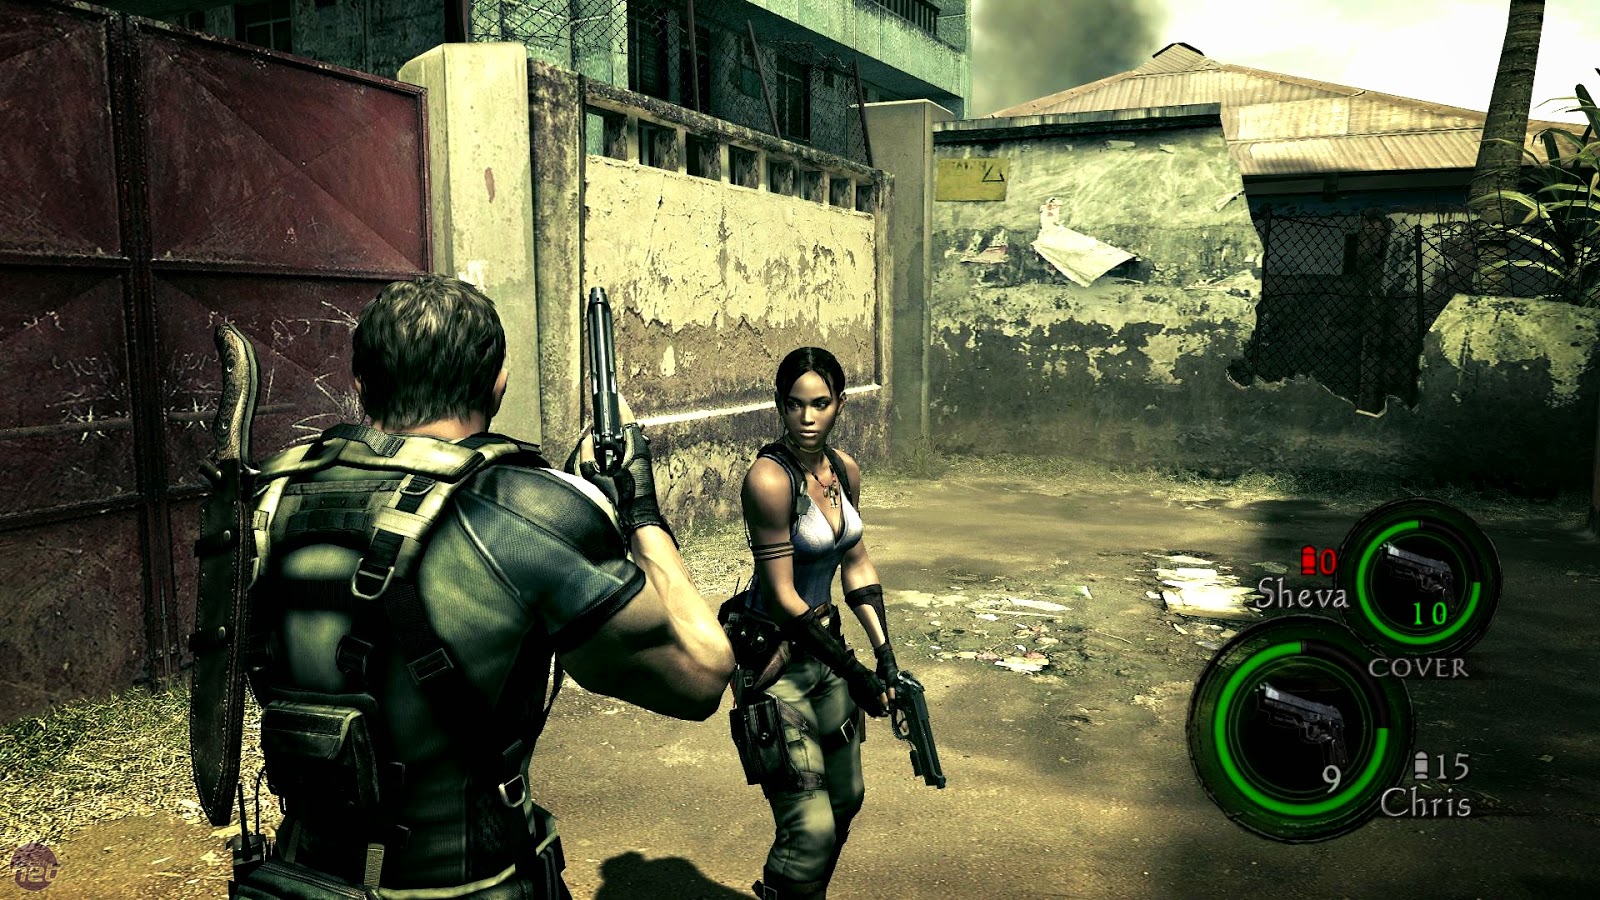 Download Game: Resident Evil 5 Full Crack Gratis